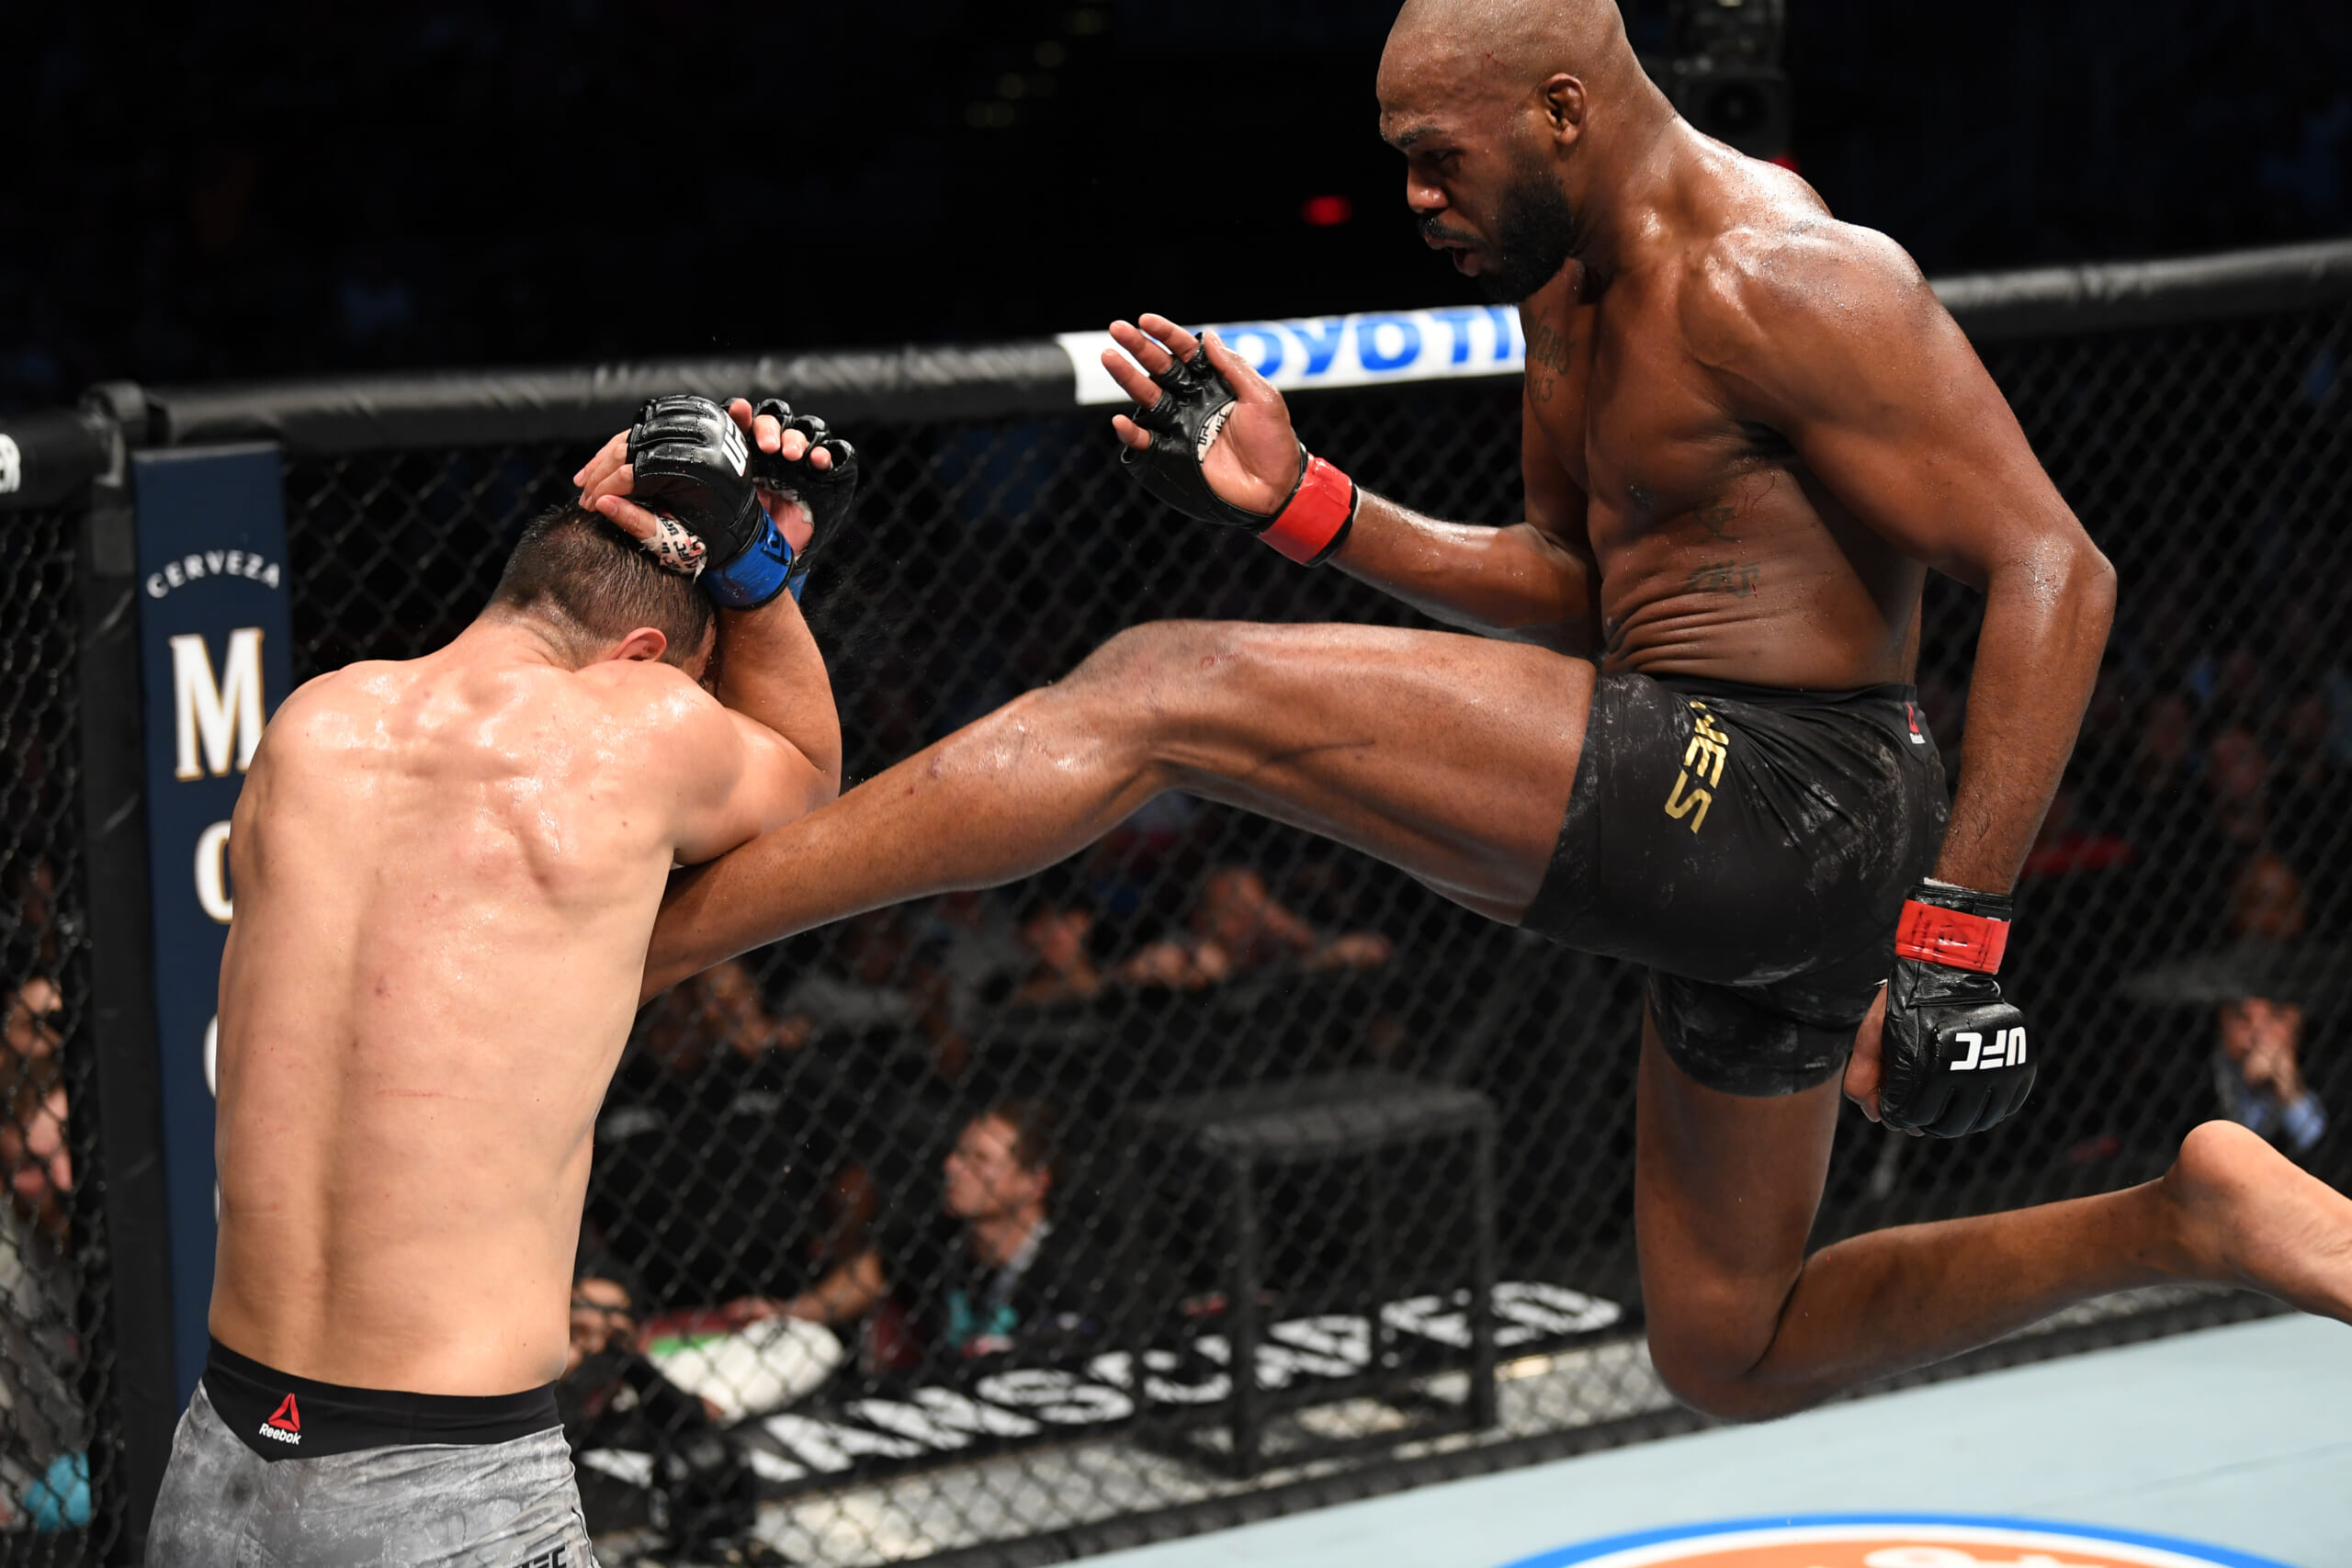 Watch Highlights of Jon Jones UFC 247 Decision Win Over Dominick Reyes